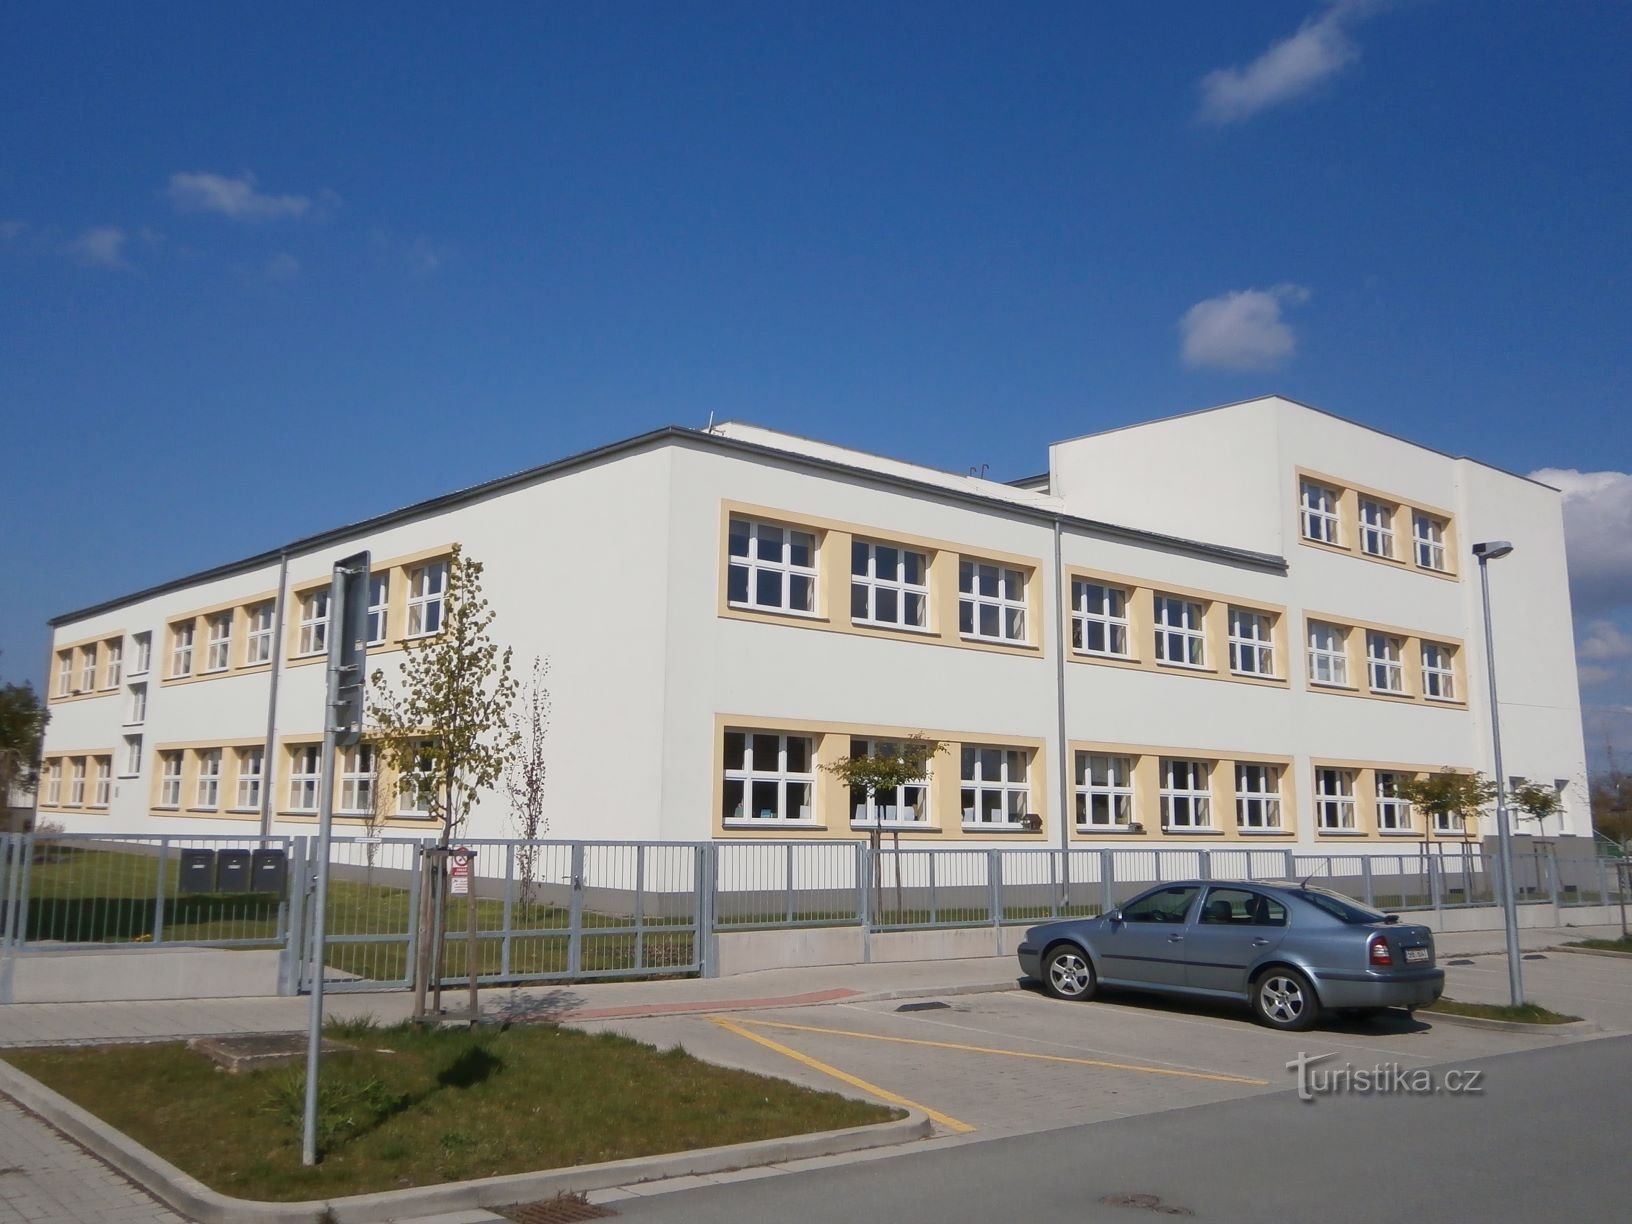 Vista lateral de la escuela jubilar de Masaryk (Černilov, 30.4.2017/XNUMX/XNUMX)